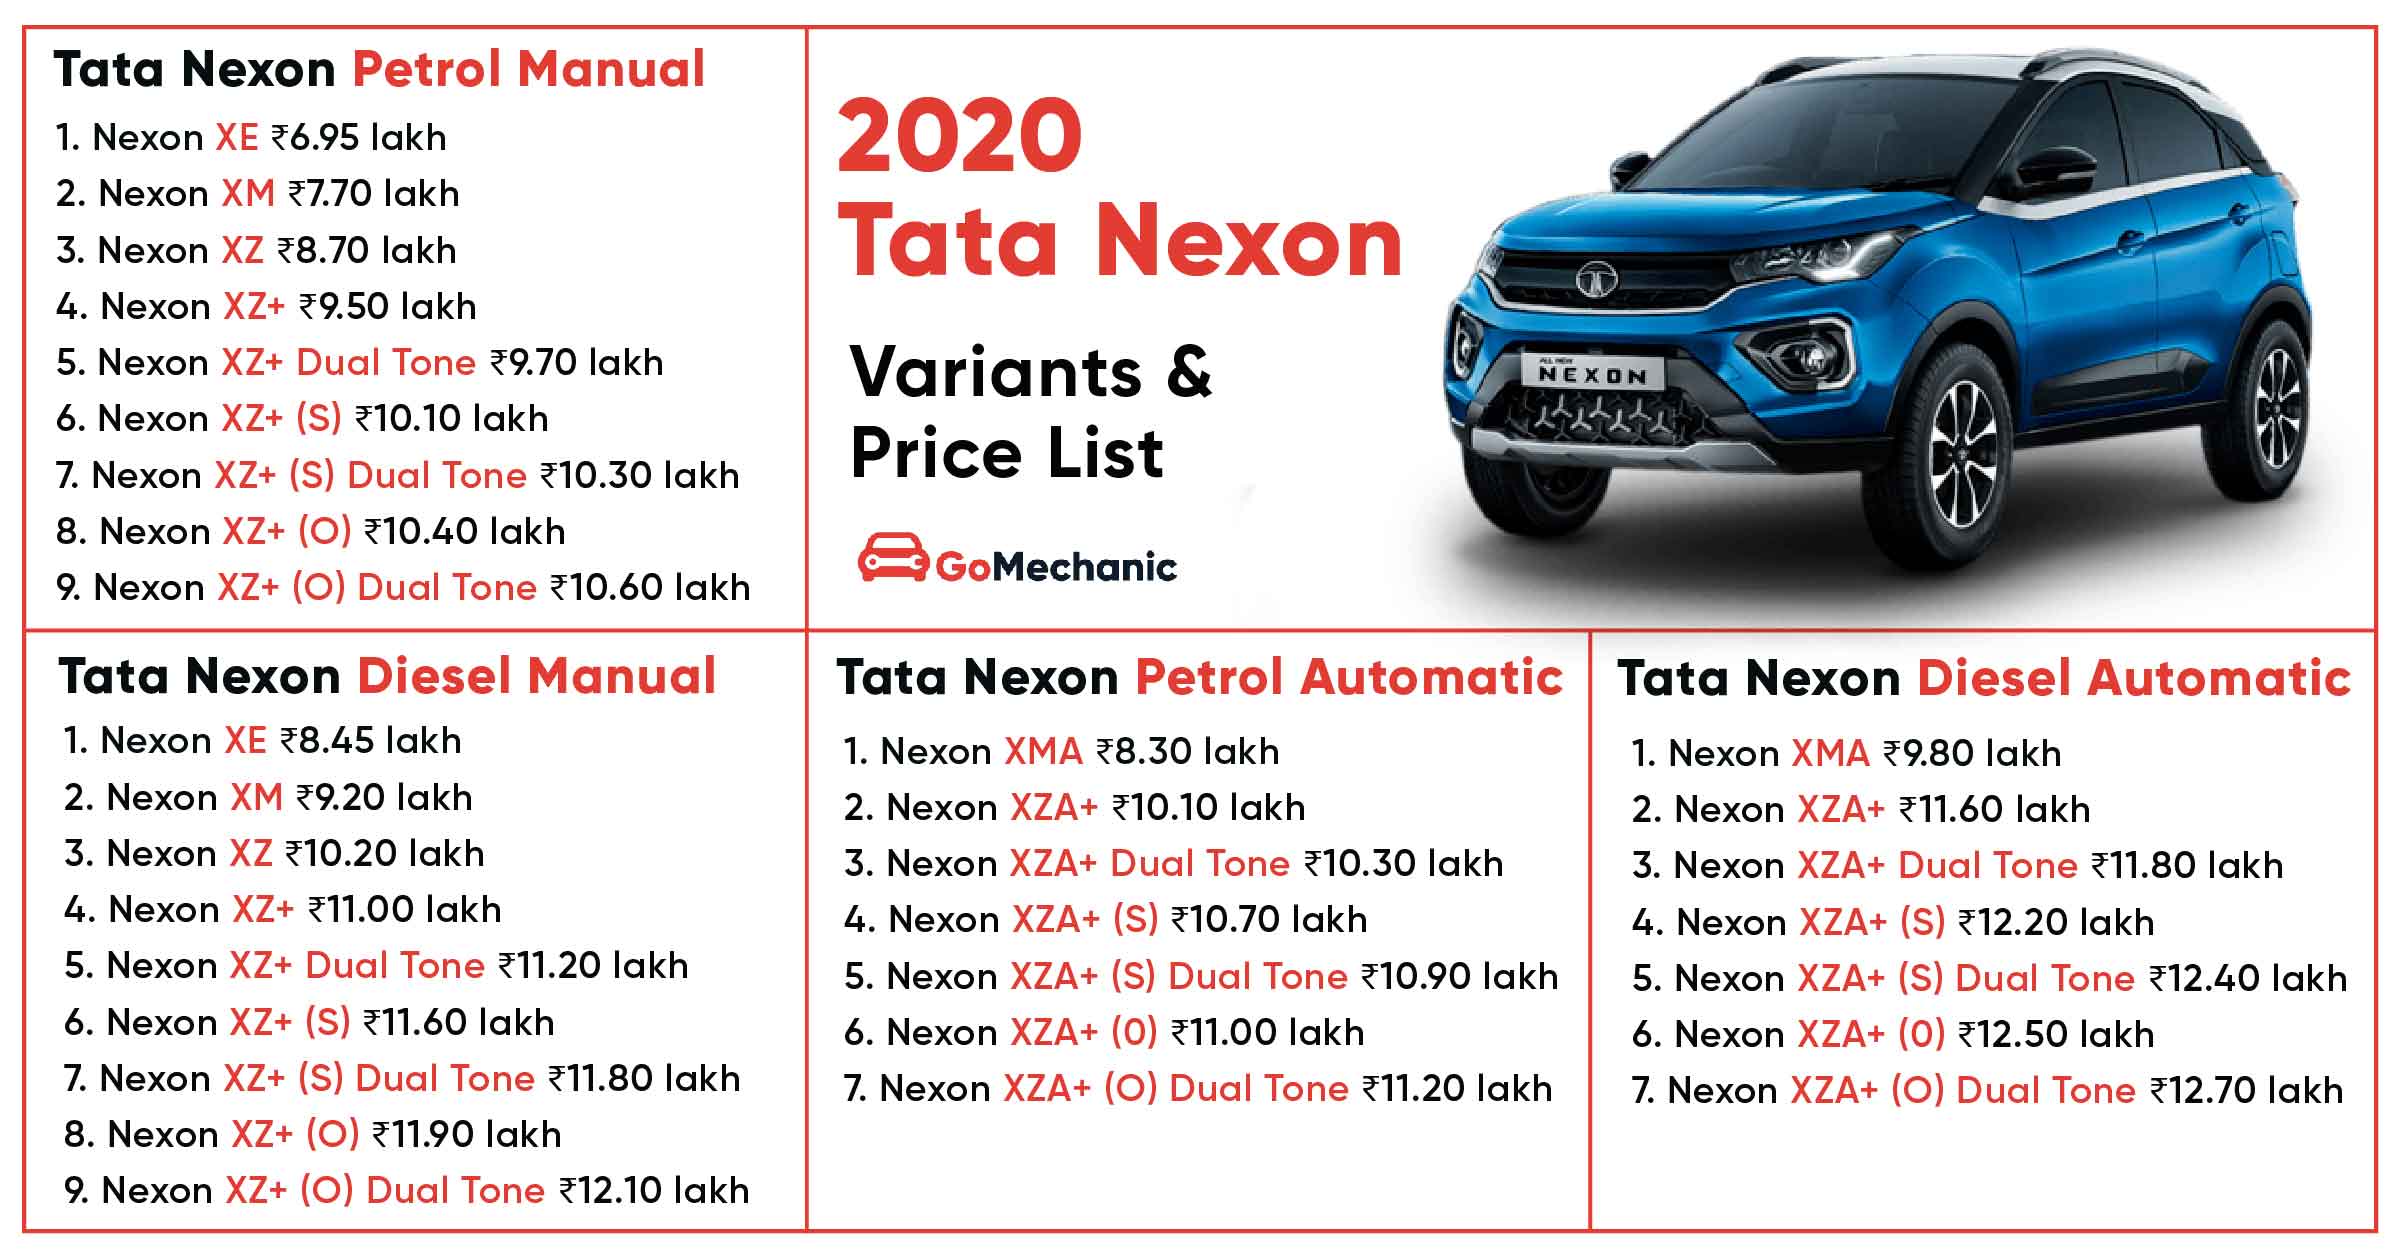 2020 Tata Nexon Variant-Wise Price List